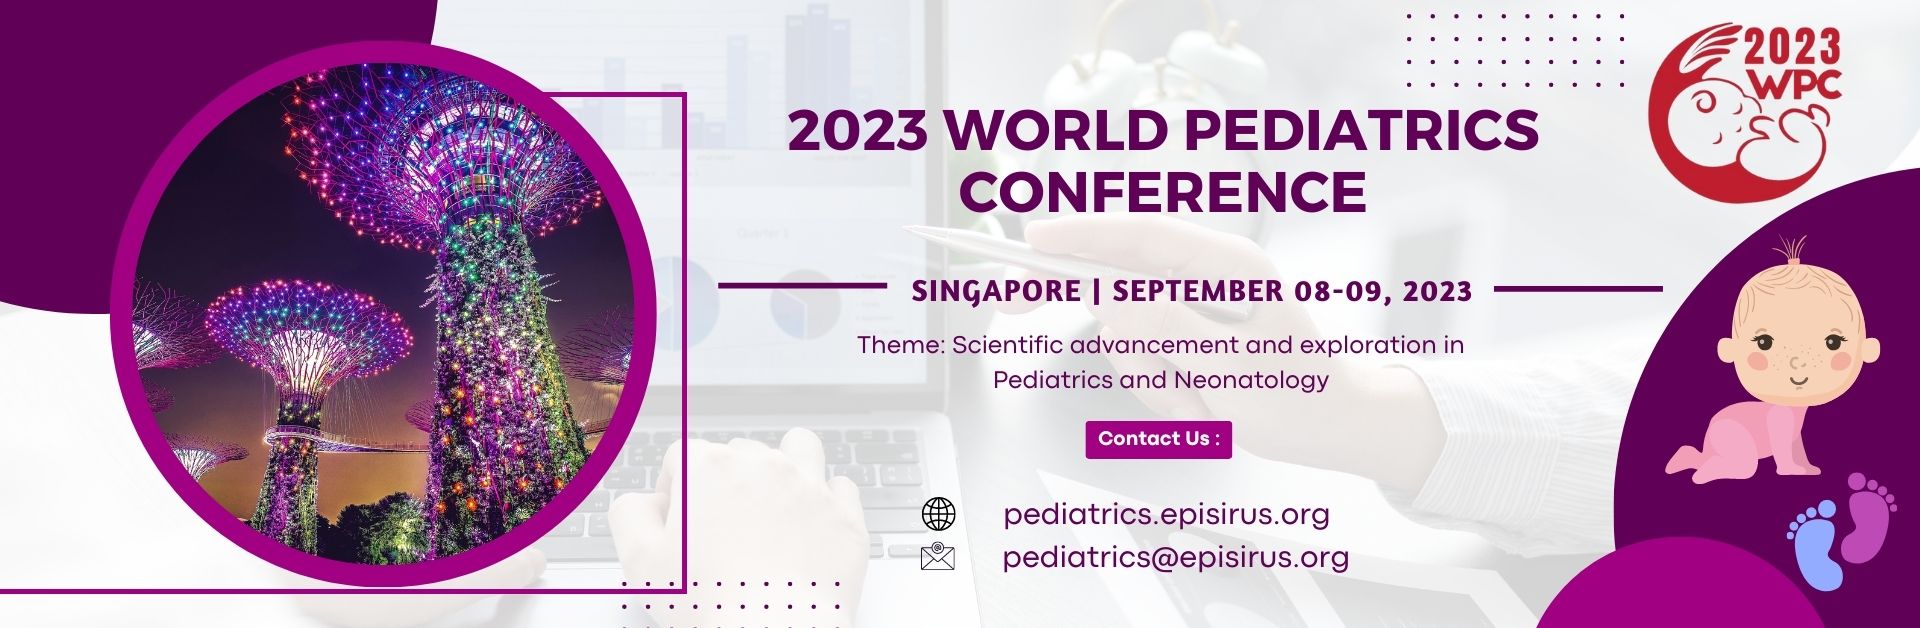 2023 World Pediatrics Conference Banner.jpg